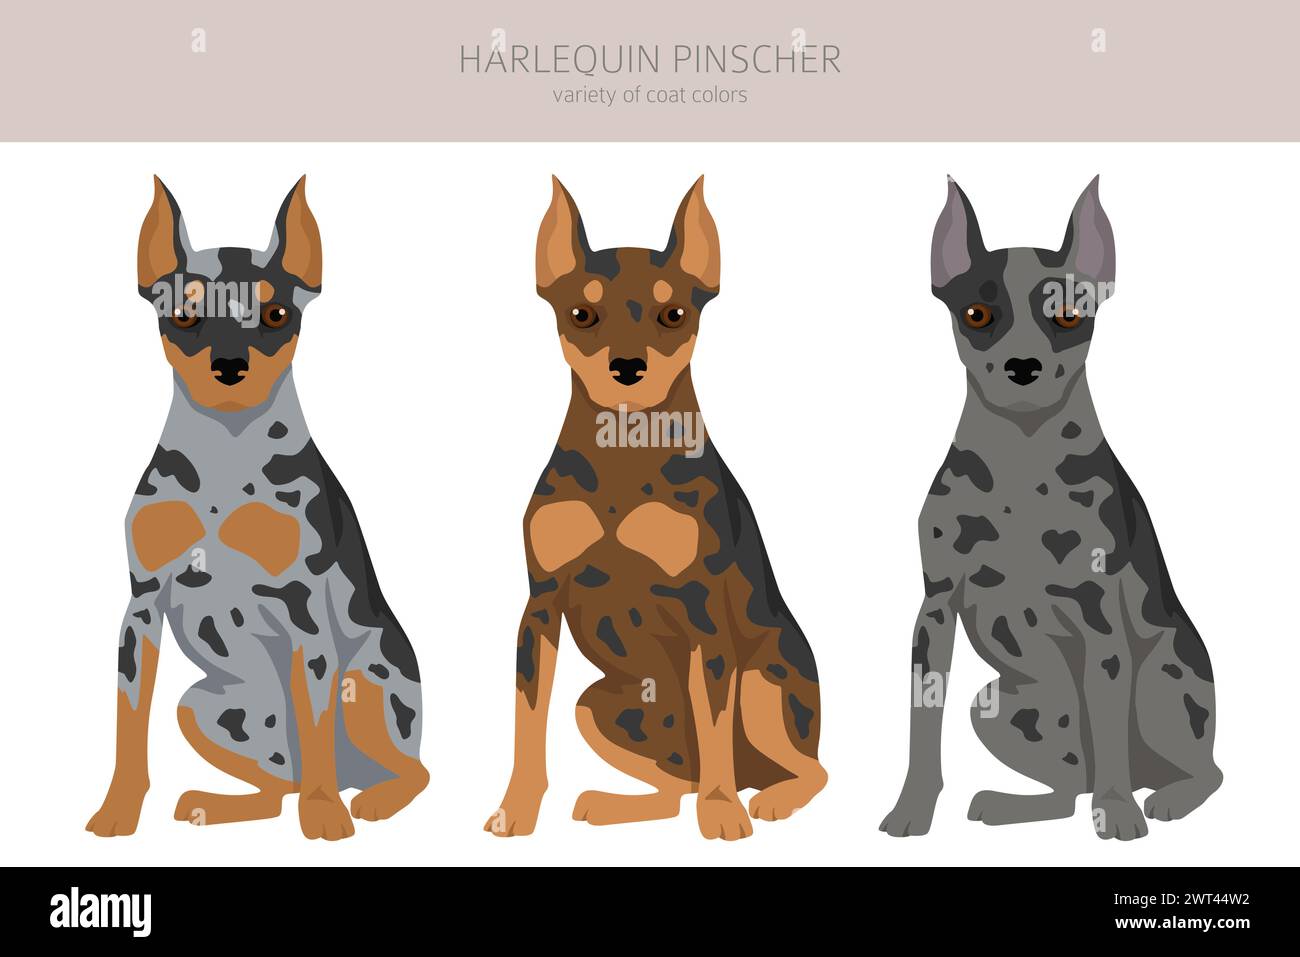 Harlequin pinscher clipart. Different poses, coat colors set.  Vector illustration Stock Vector